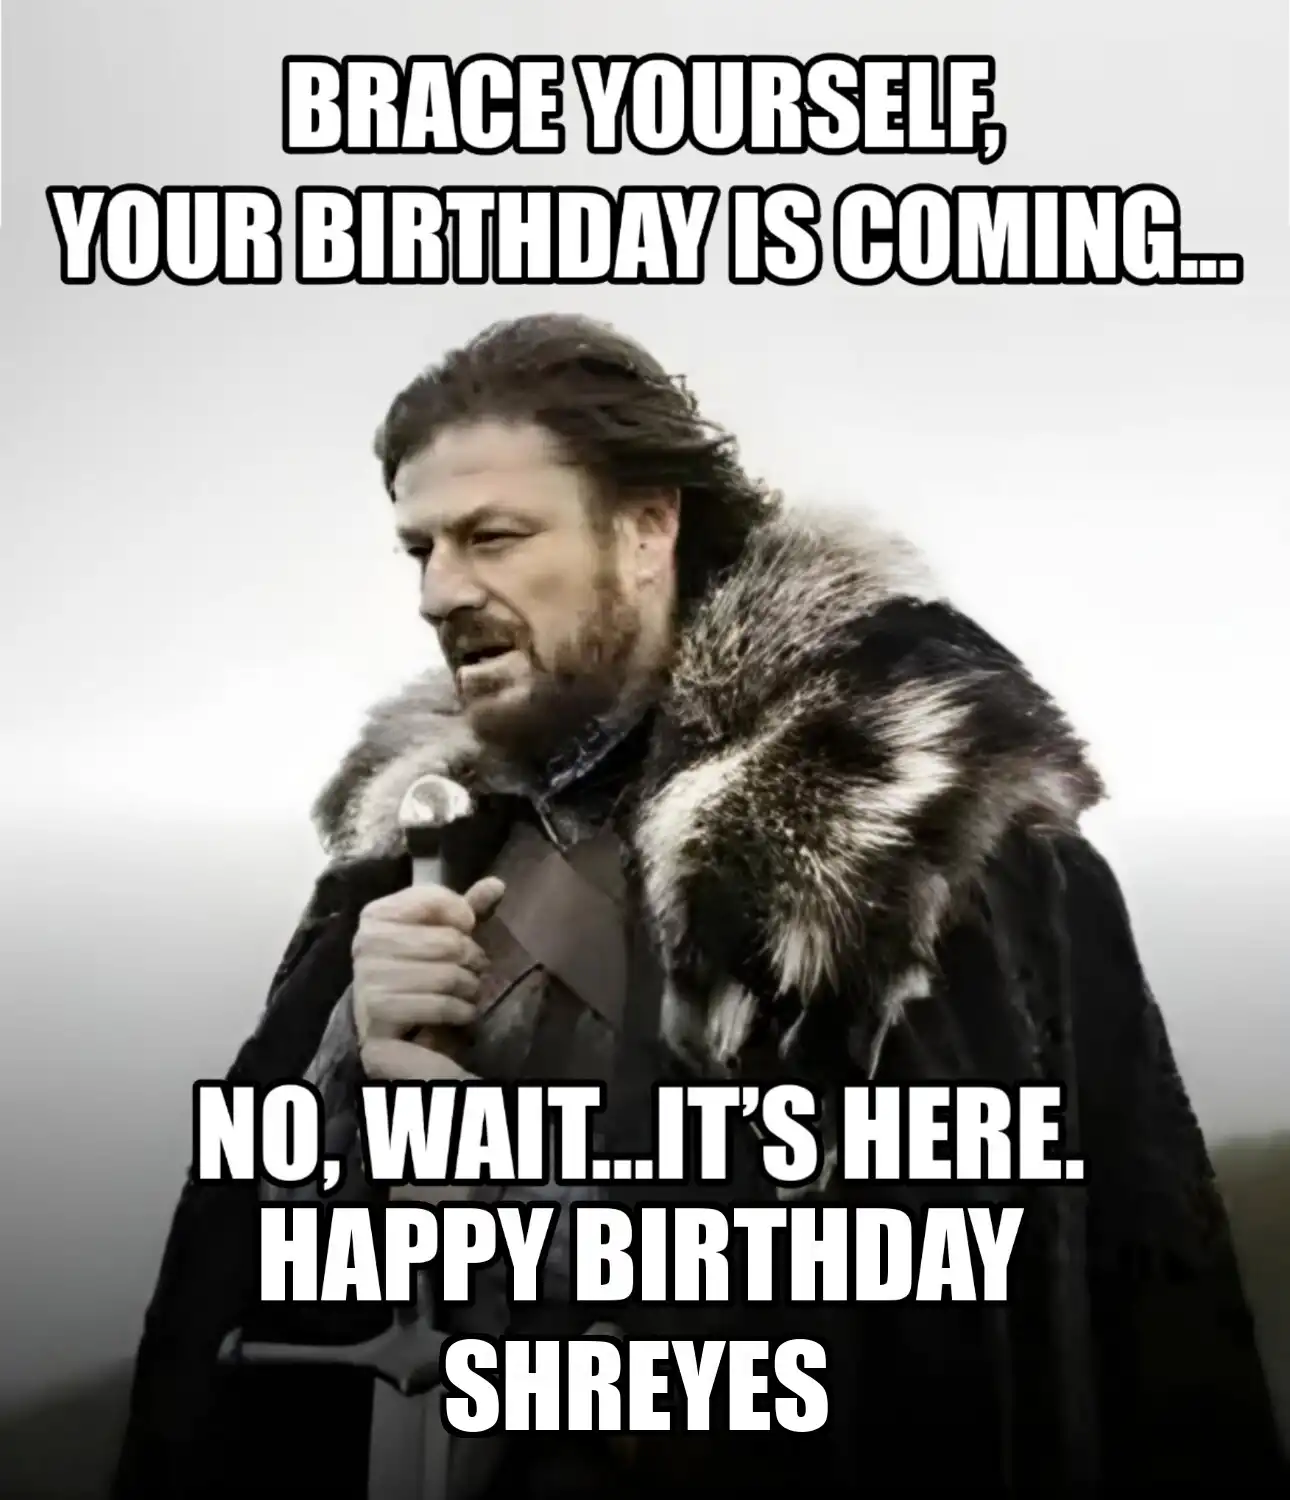 Happy Birthday Shreyes Brace Yourself Your Birthday Is Coming Meme